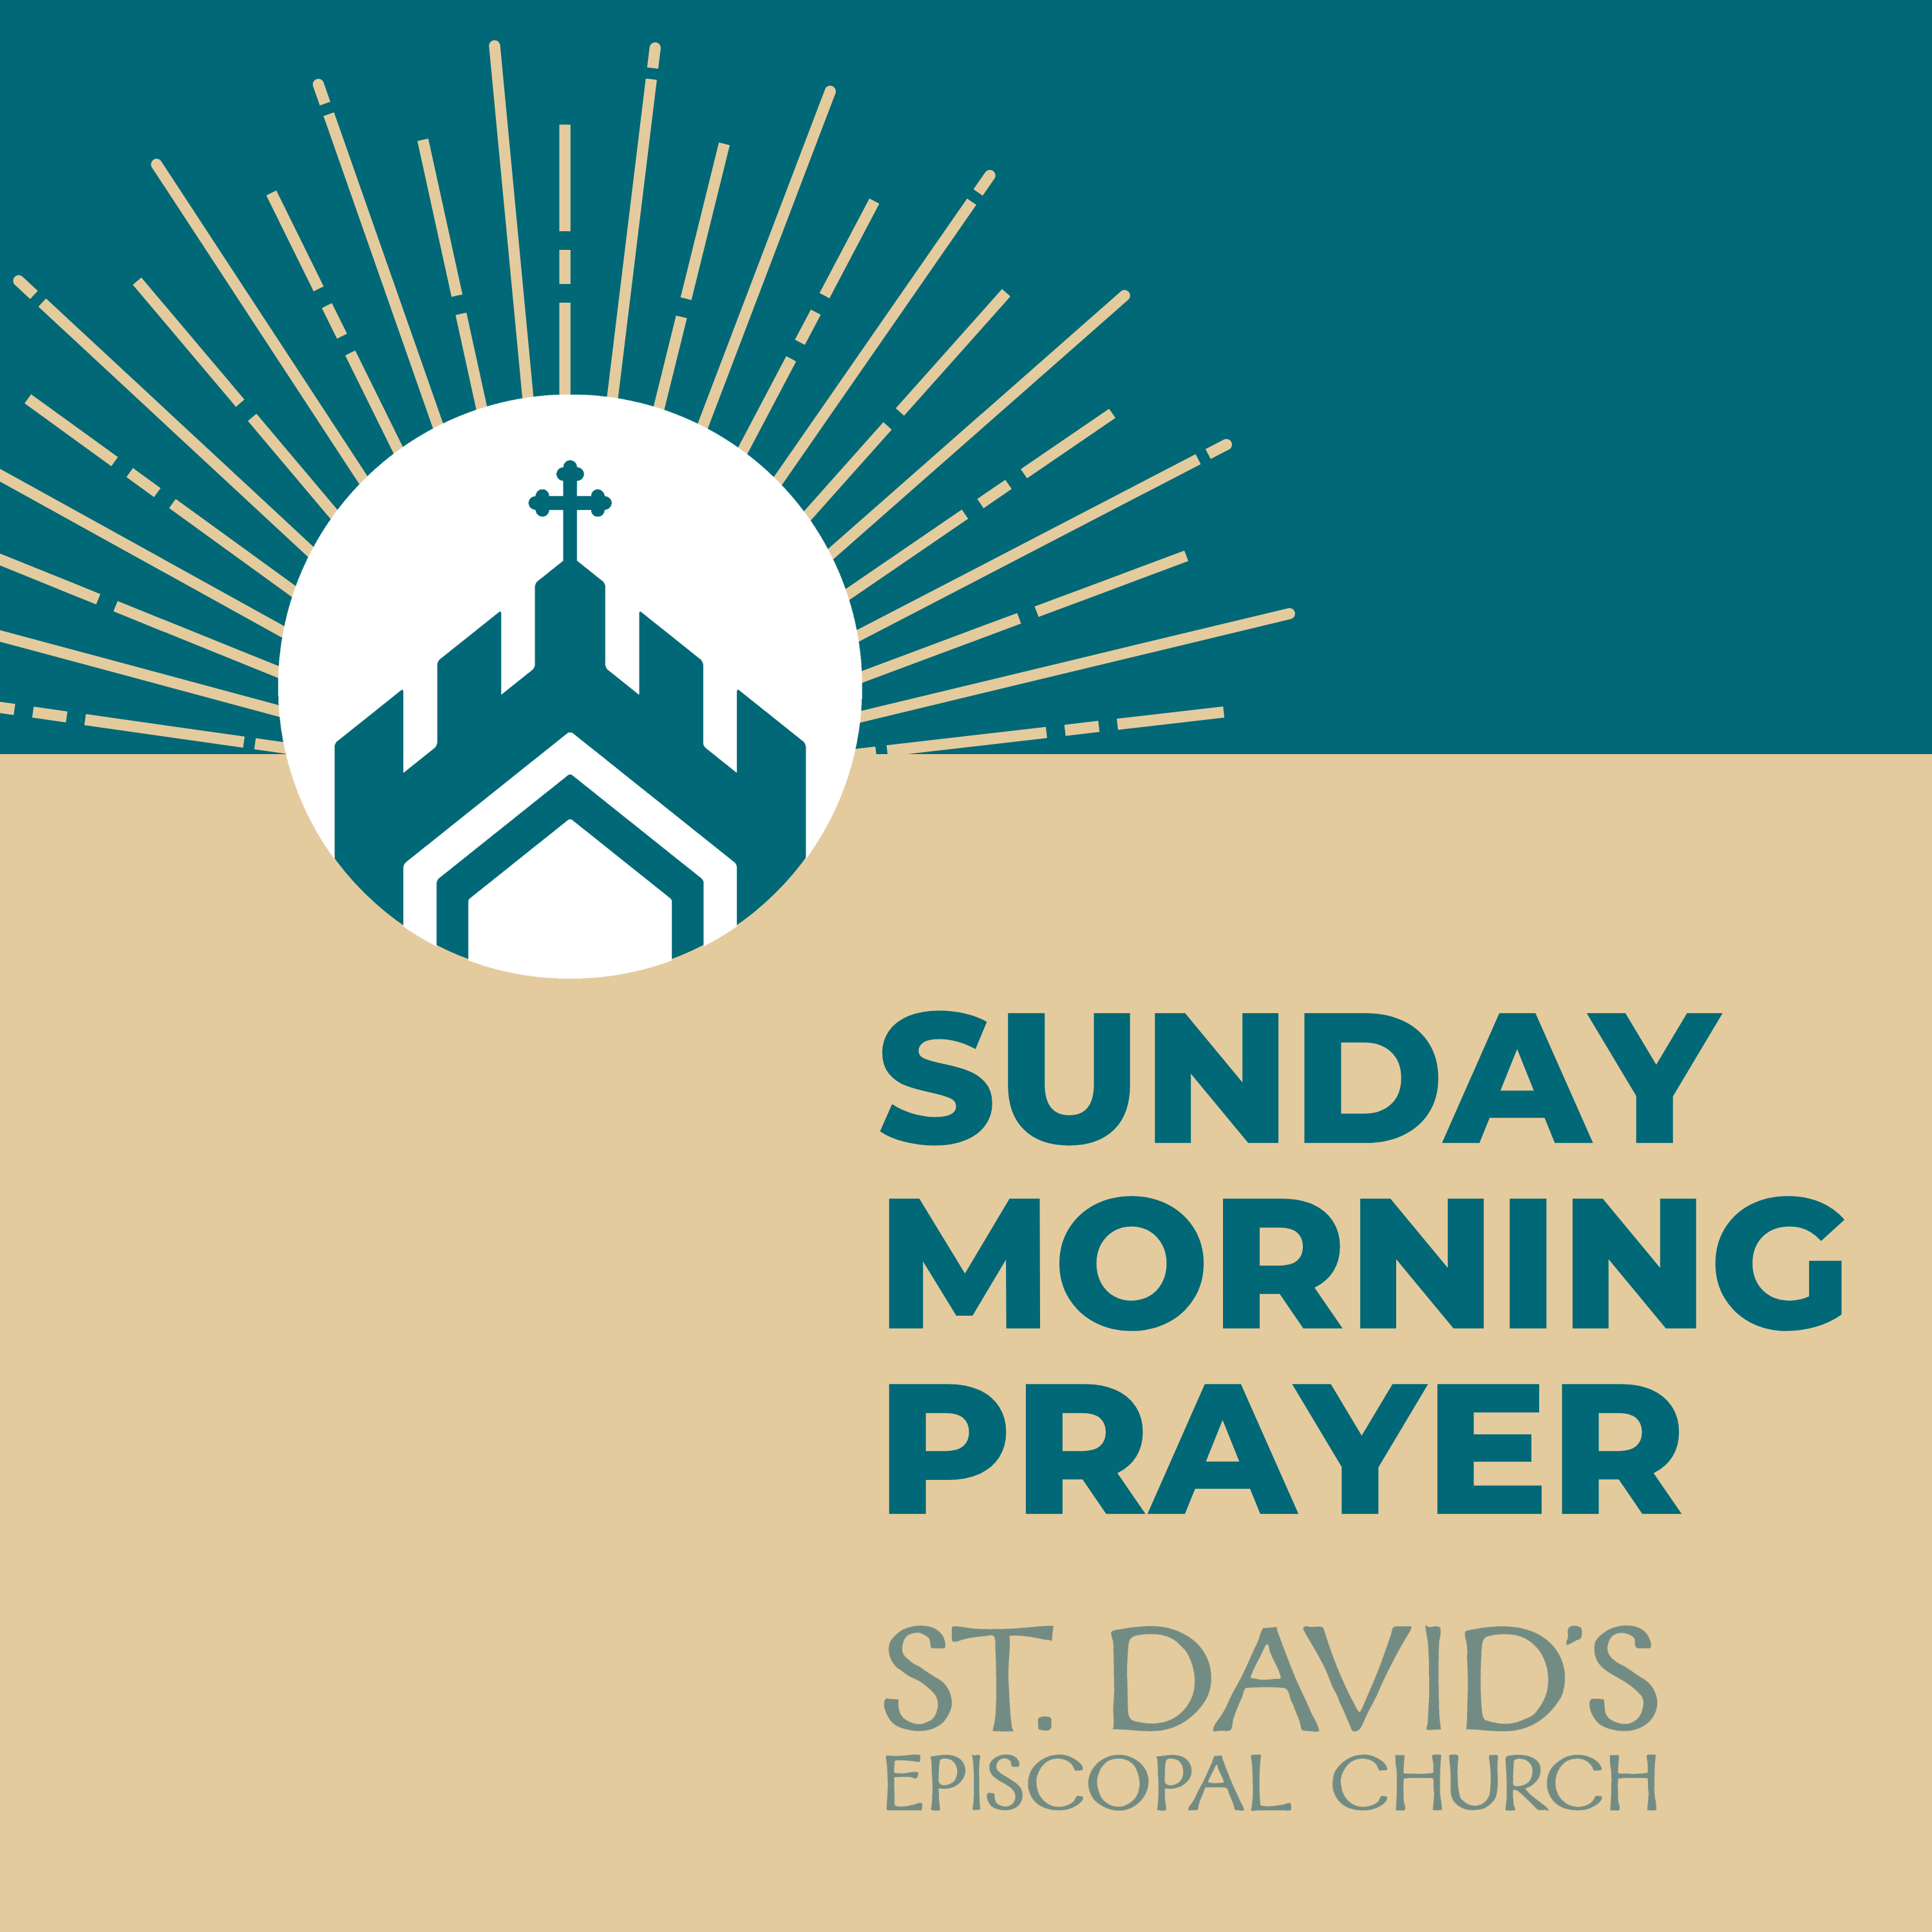 Sunday Morning prayer: Rite Two, Year 2, 22nd Sunday after Pentecost